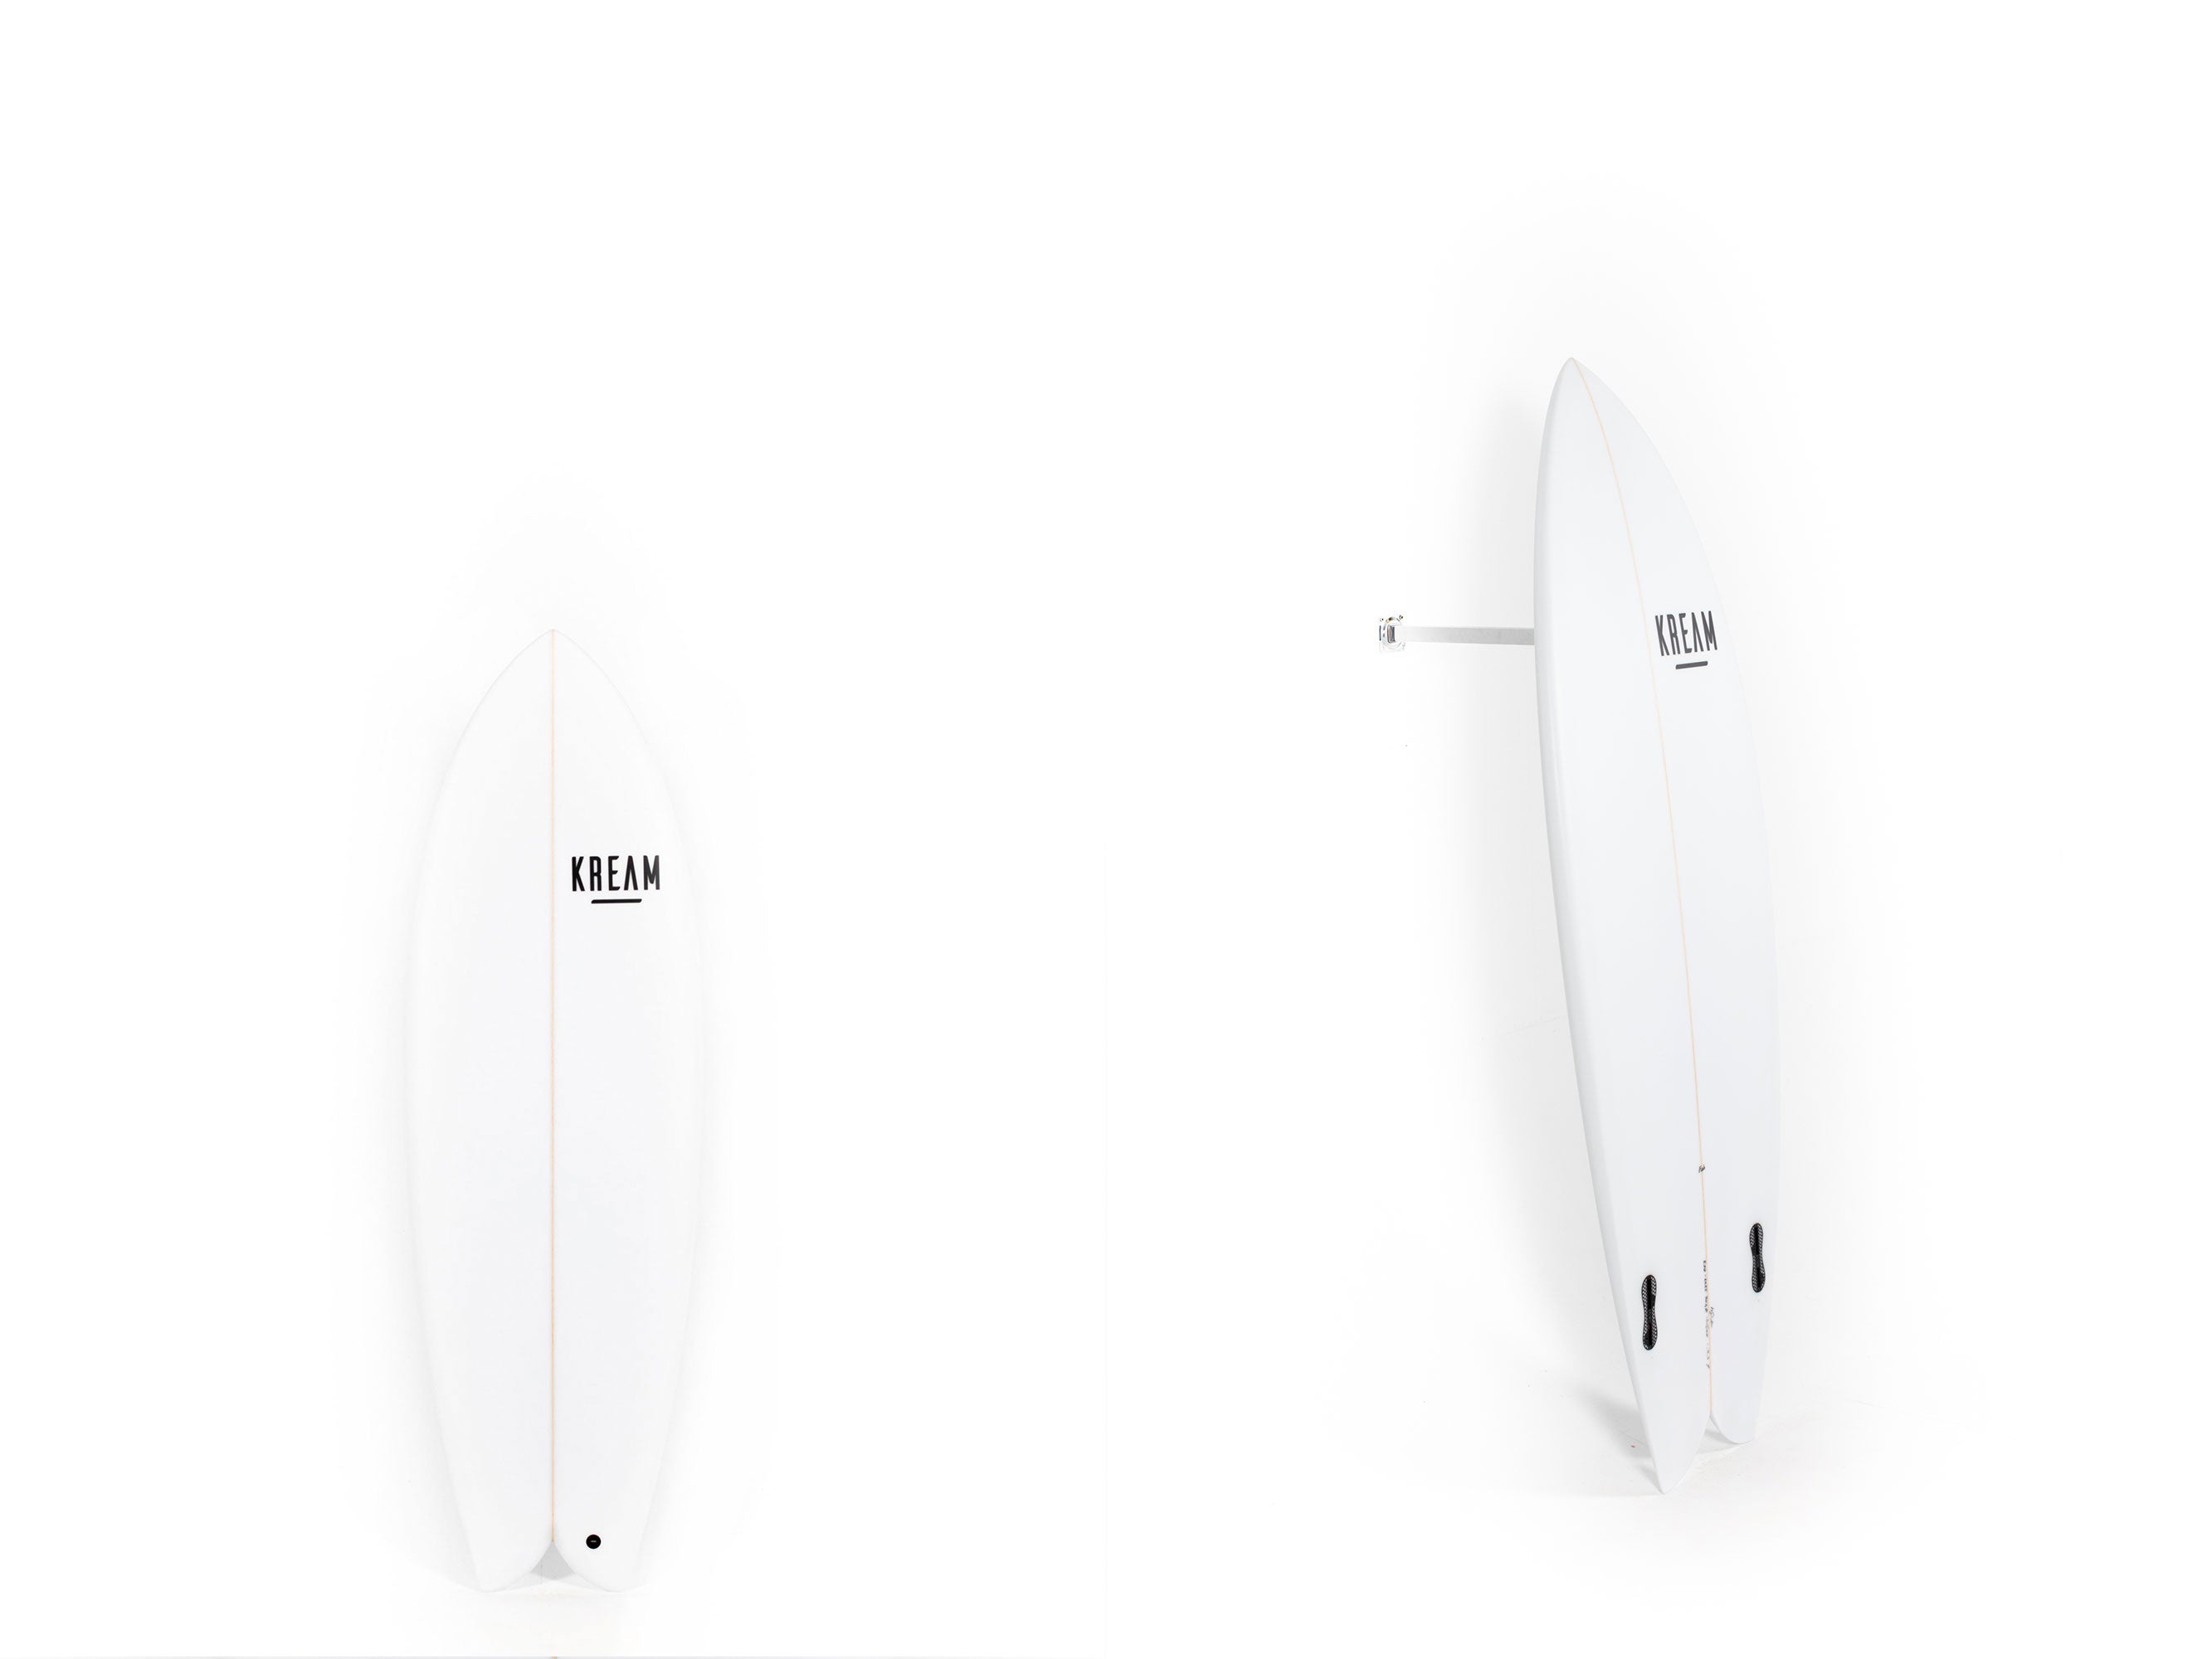 Pukas Surf Shop - Kream Surfboards